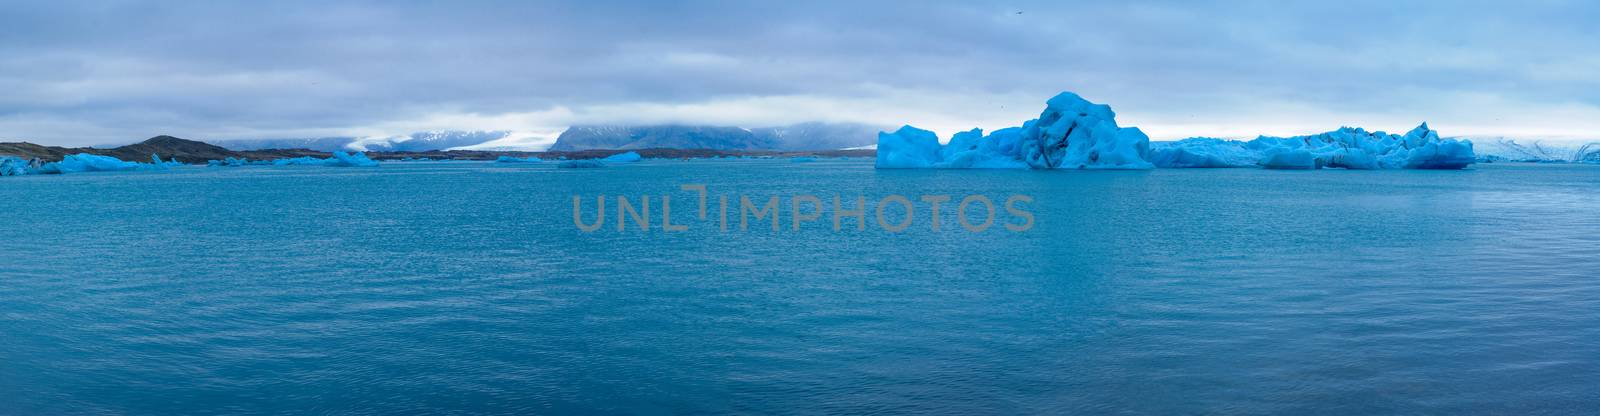 Jokulsarlon glacier lagoon by RnDmS